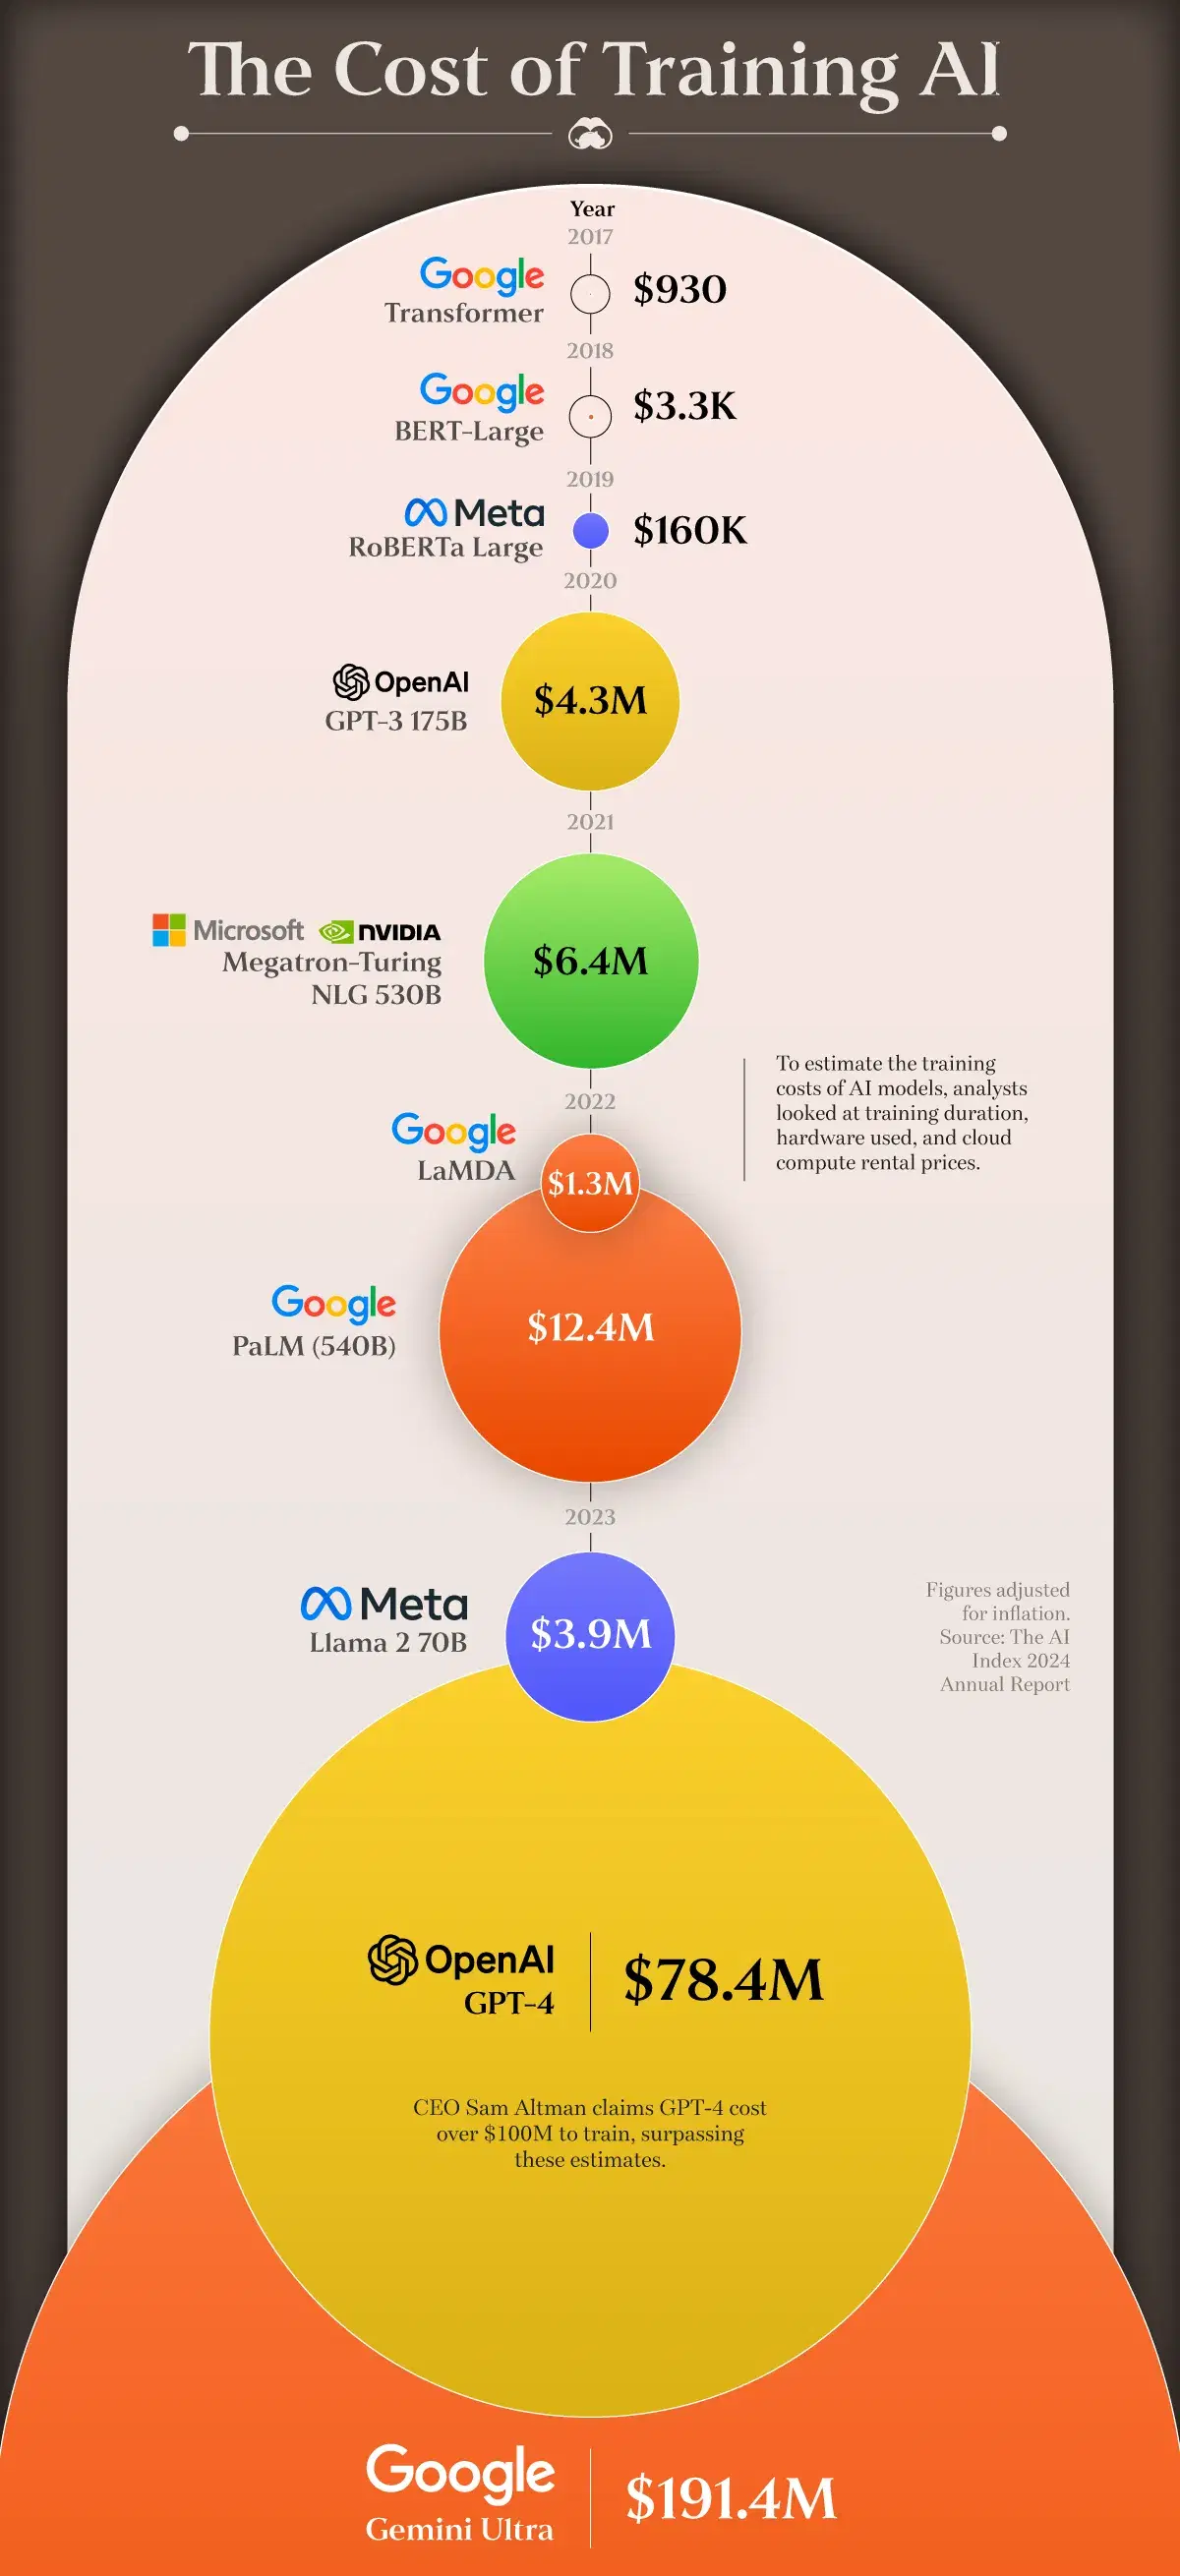 Google’s Gemini Ultra Cost $191M to Develop ✨